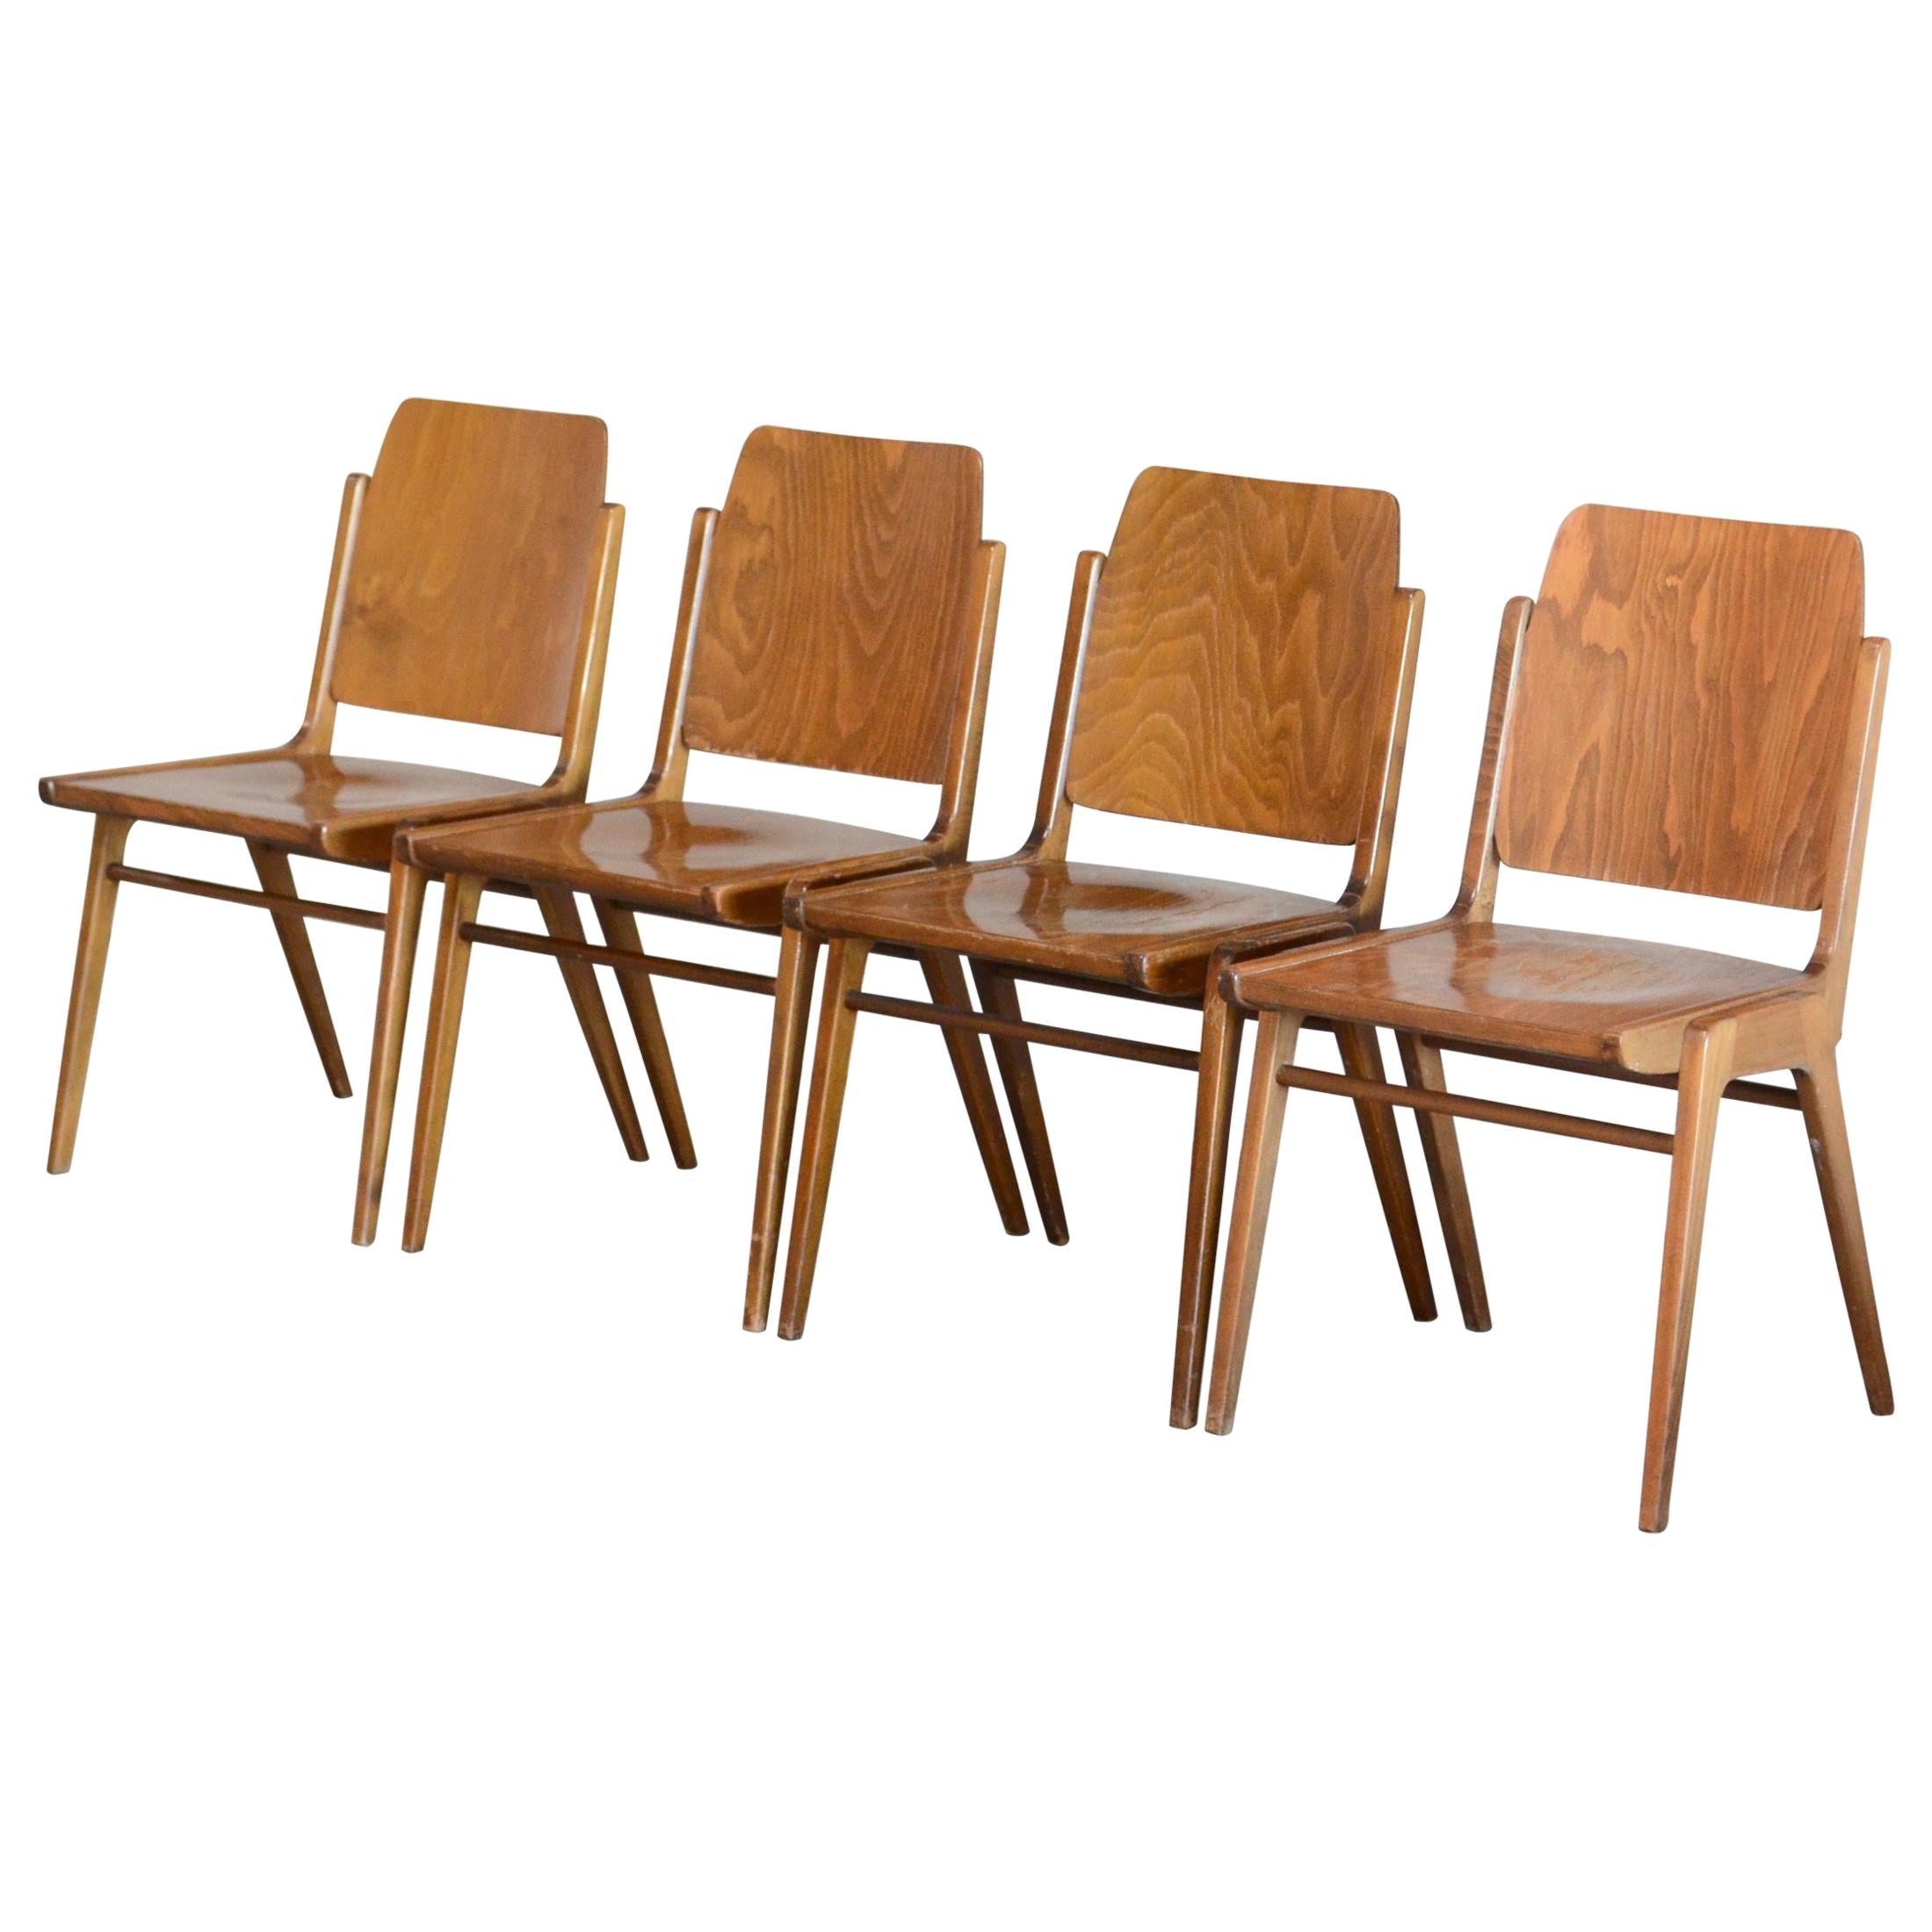 4 Set of Original Austro Chairs by Franz Schuster for Wiesner Hager Austria 1959